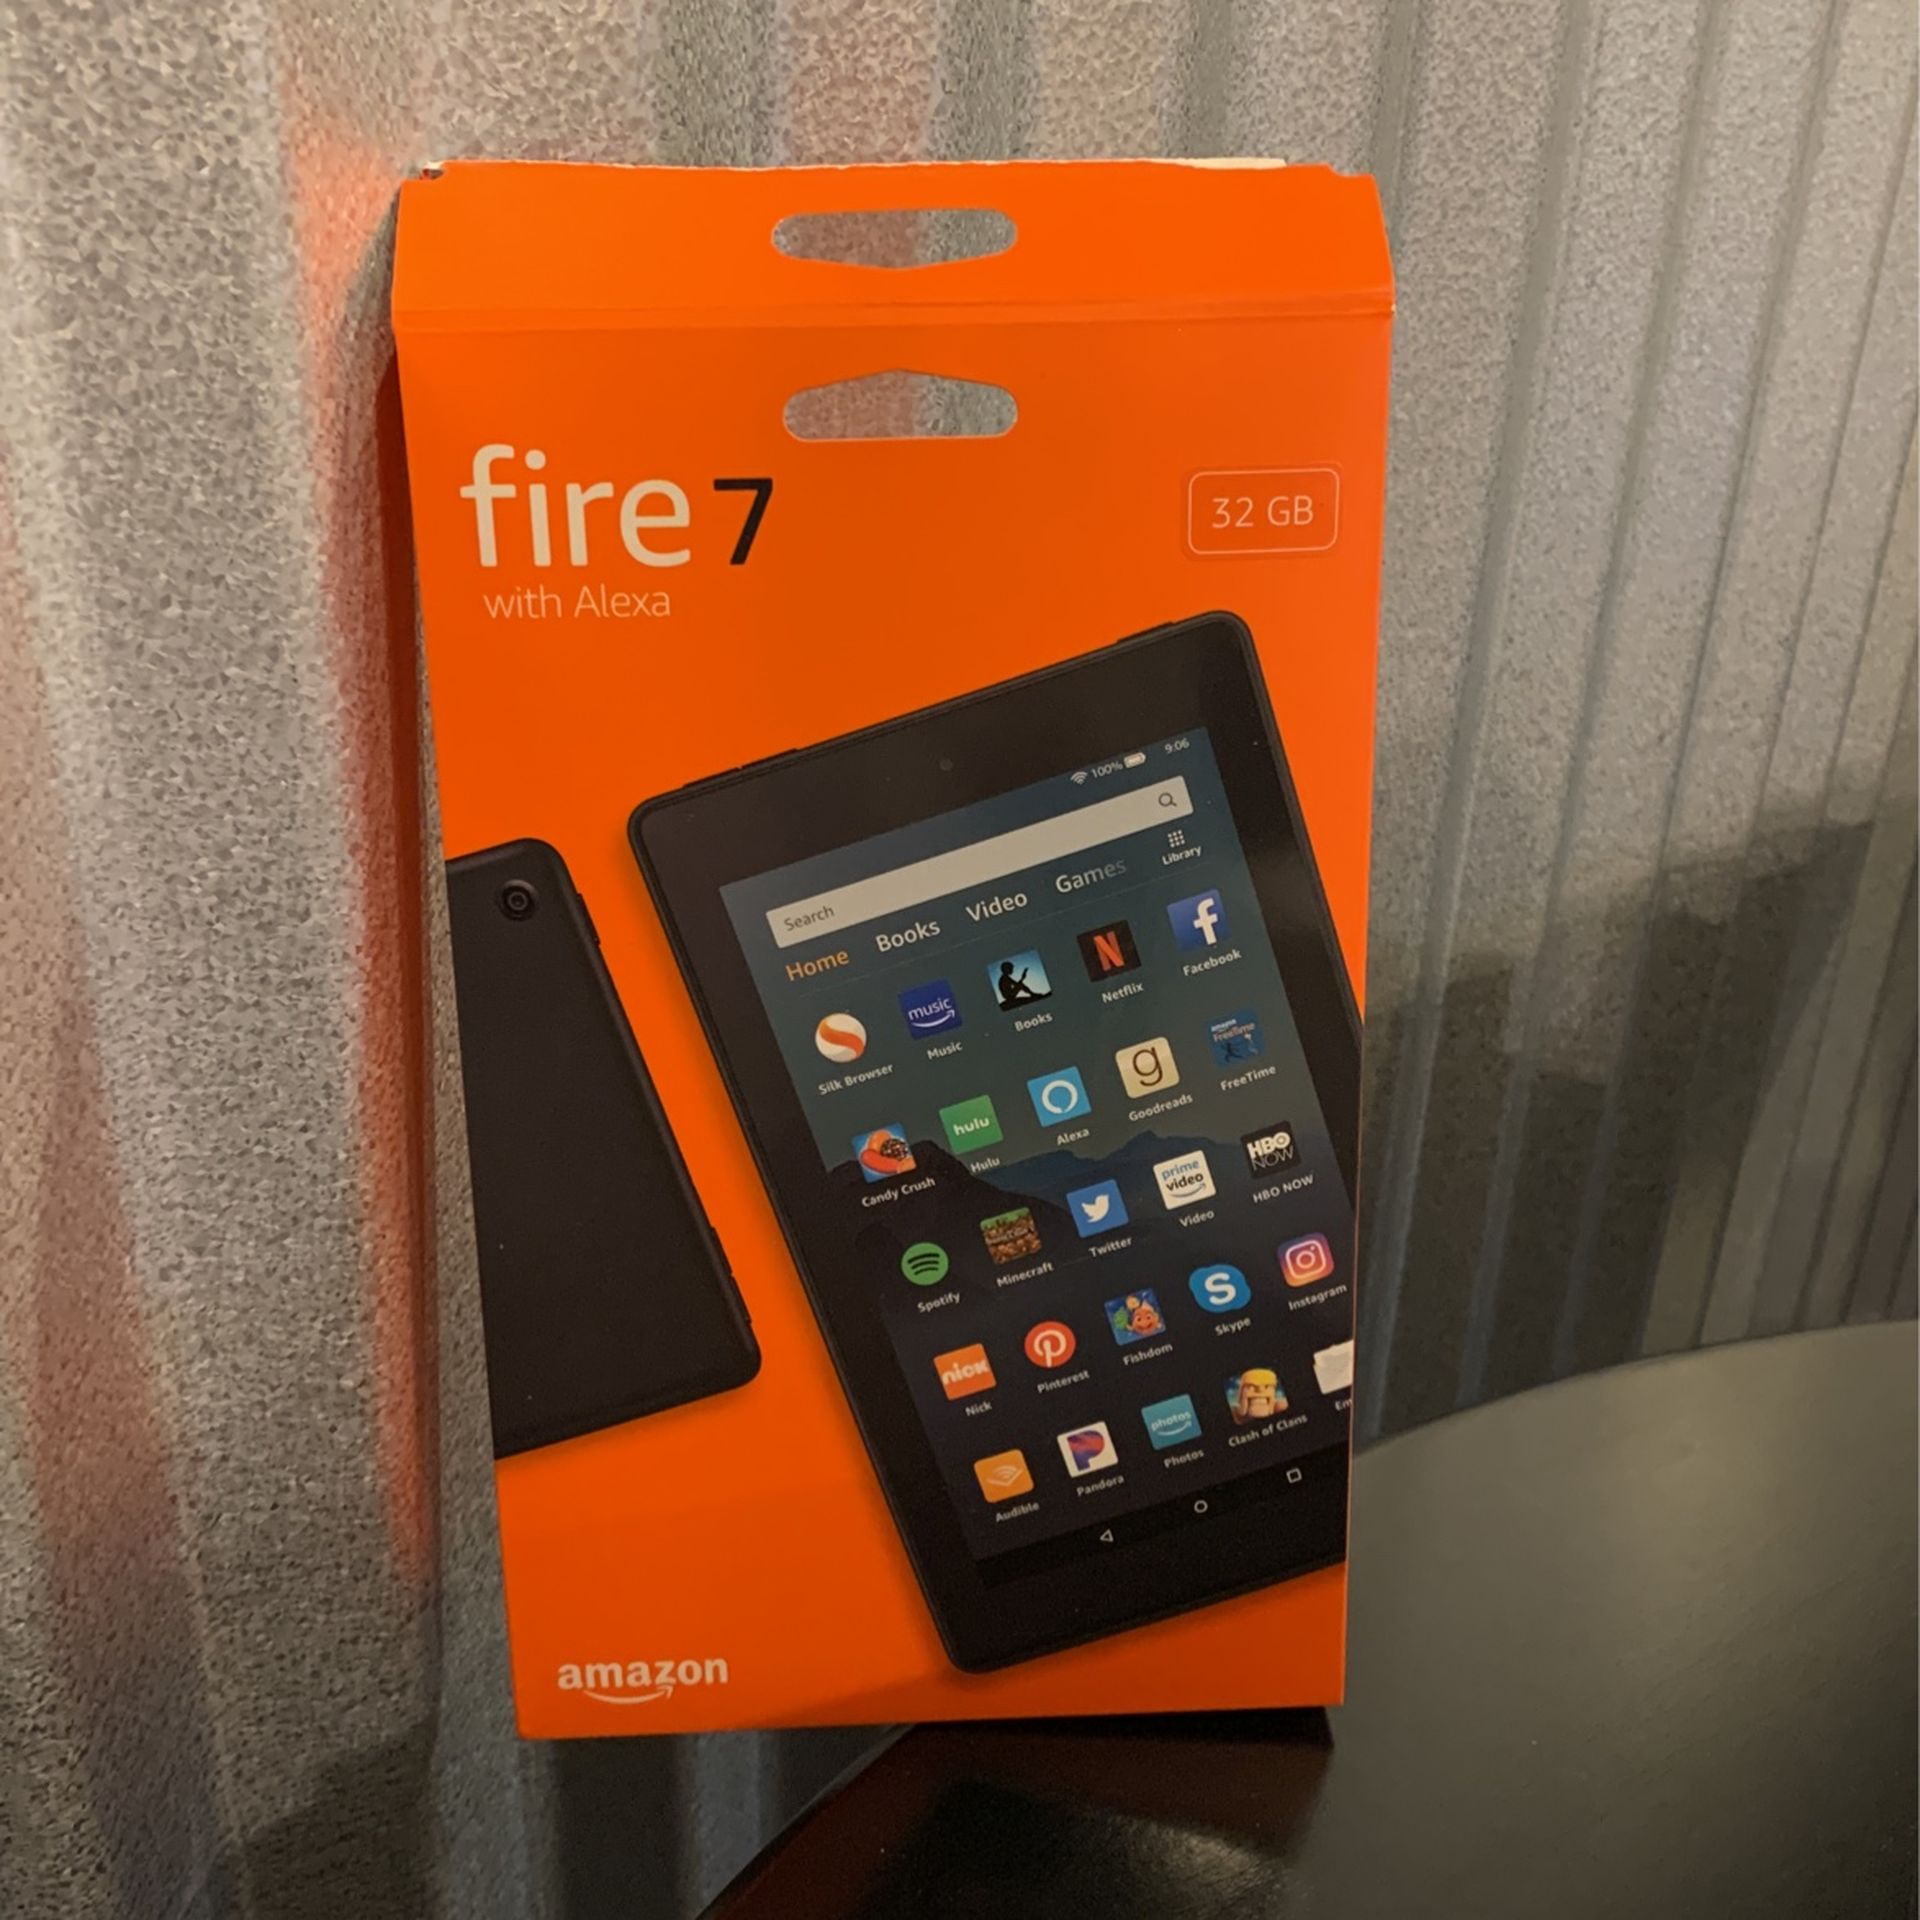 Amazon Fire 7 (32 GB)